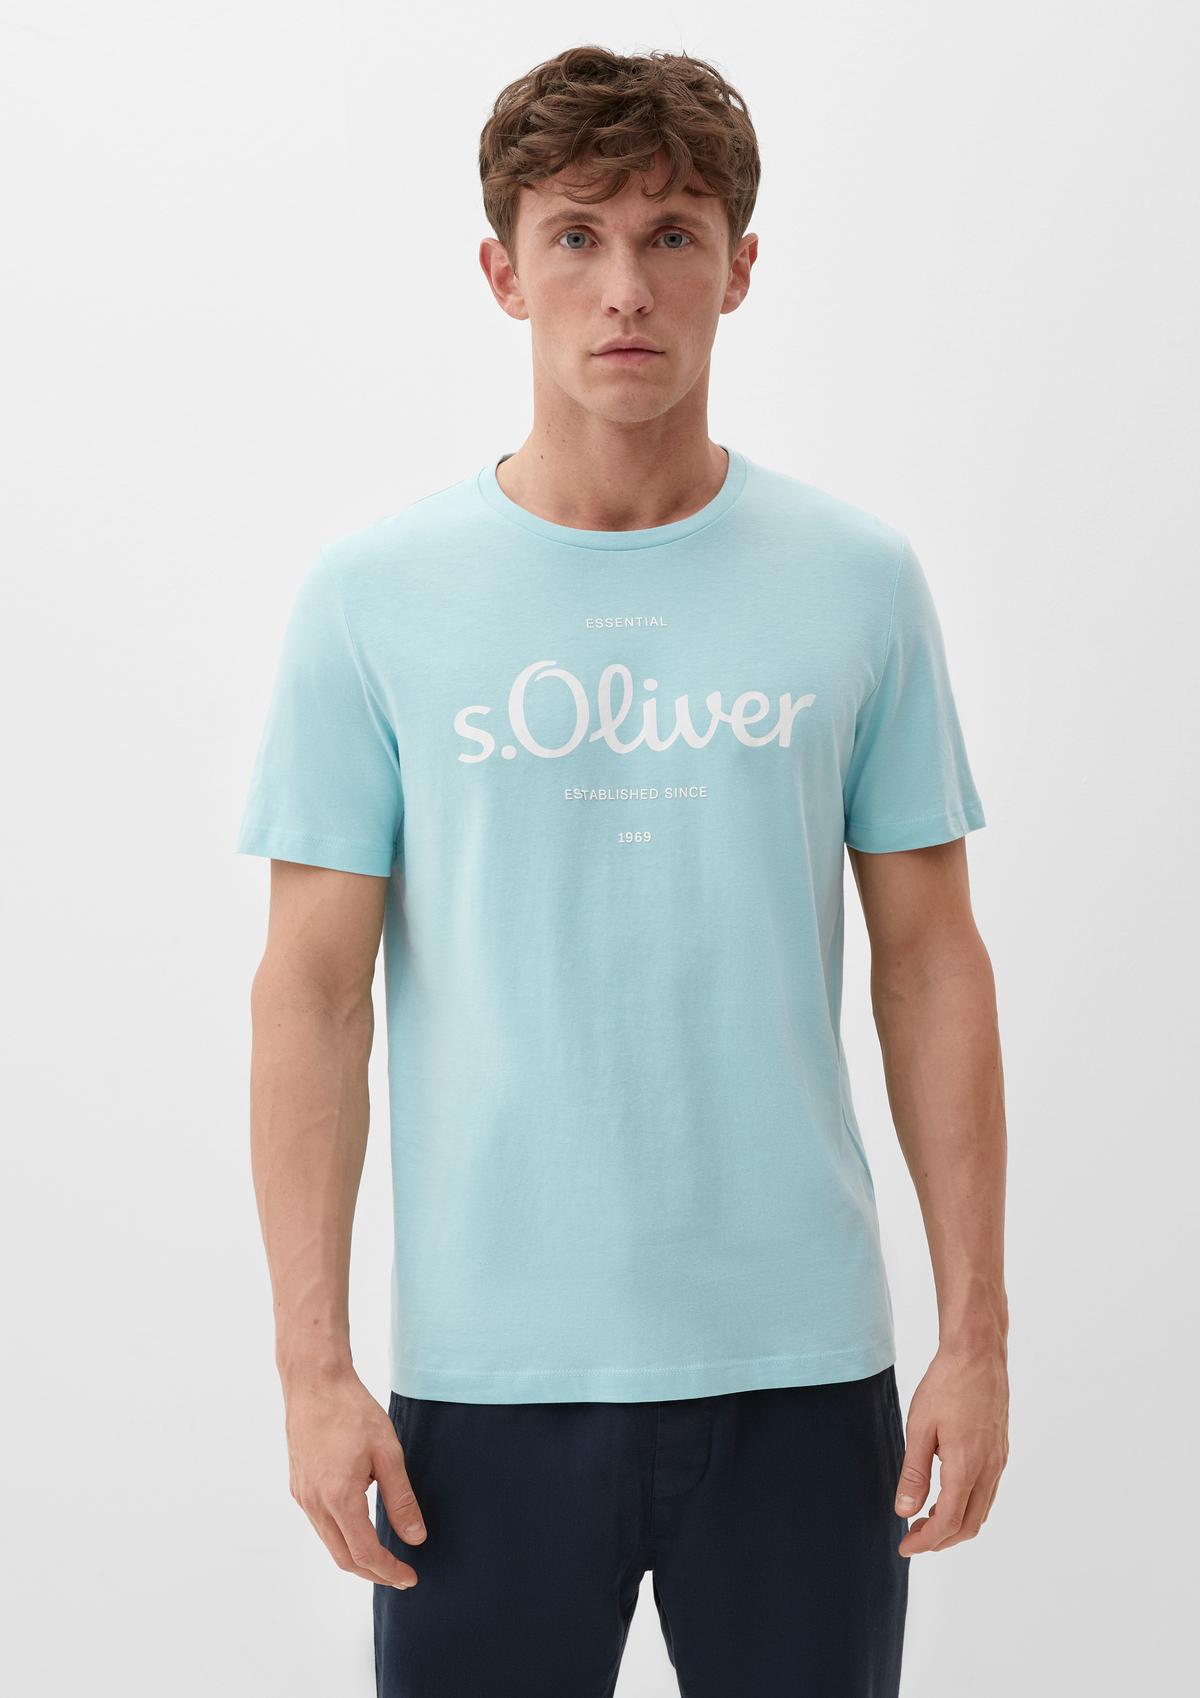 Men for Long Sleeves & Basic T-Shirts